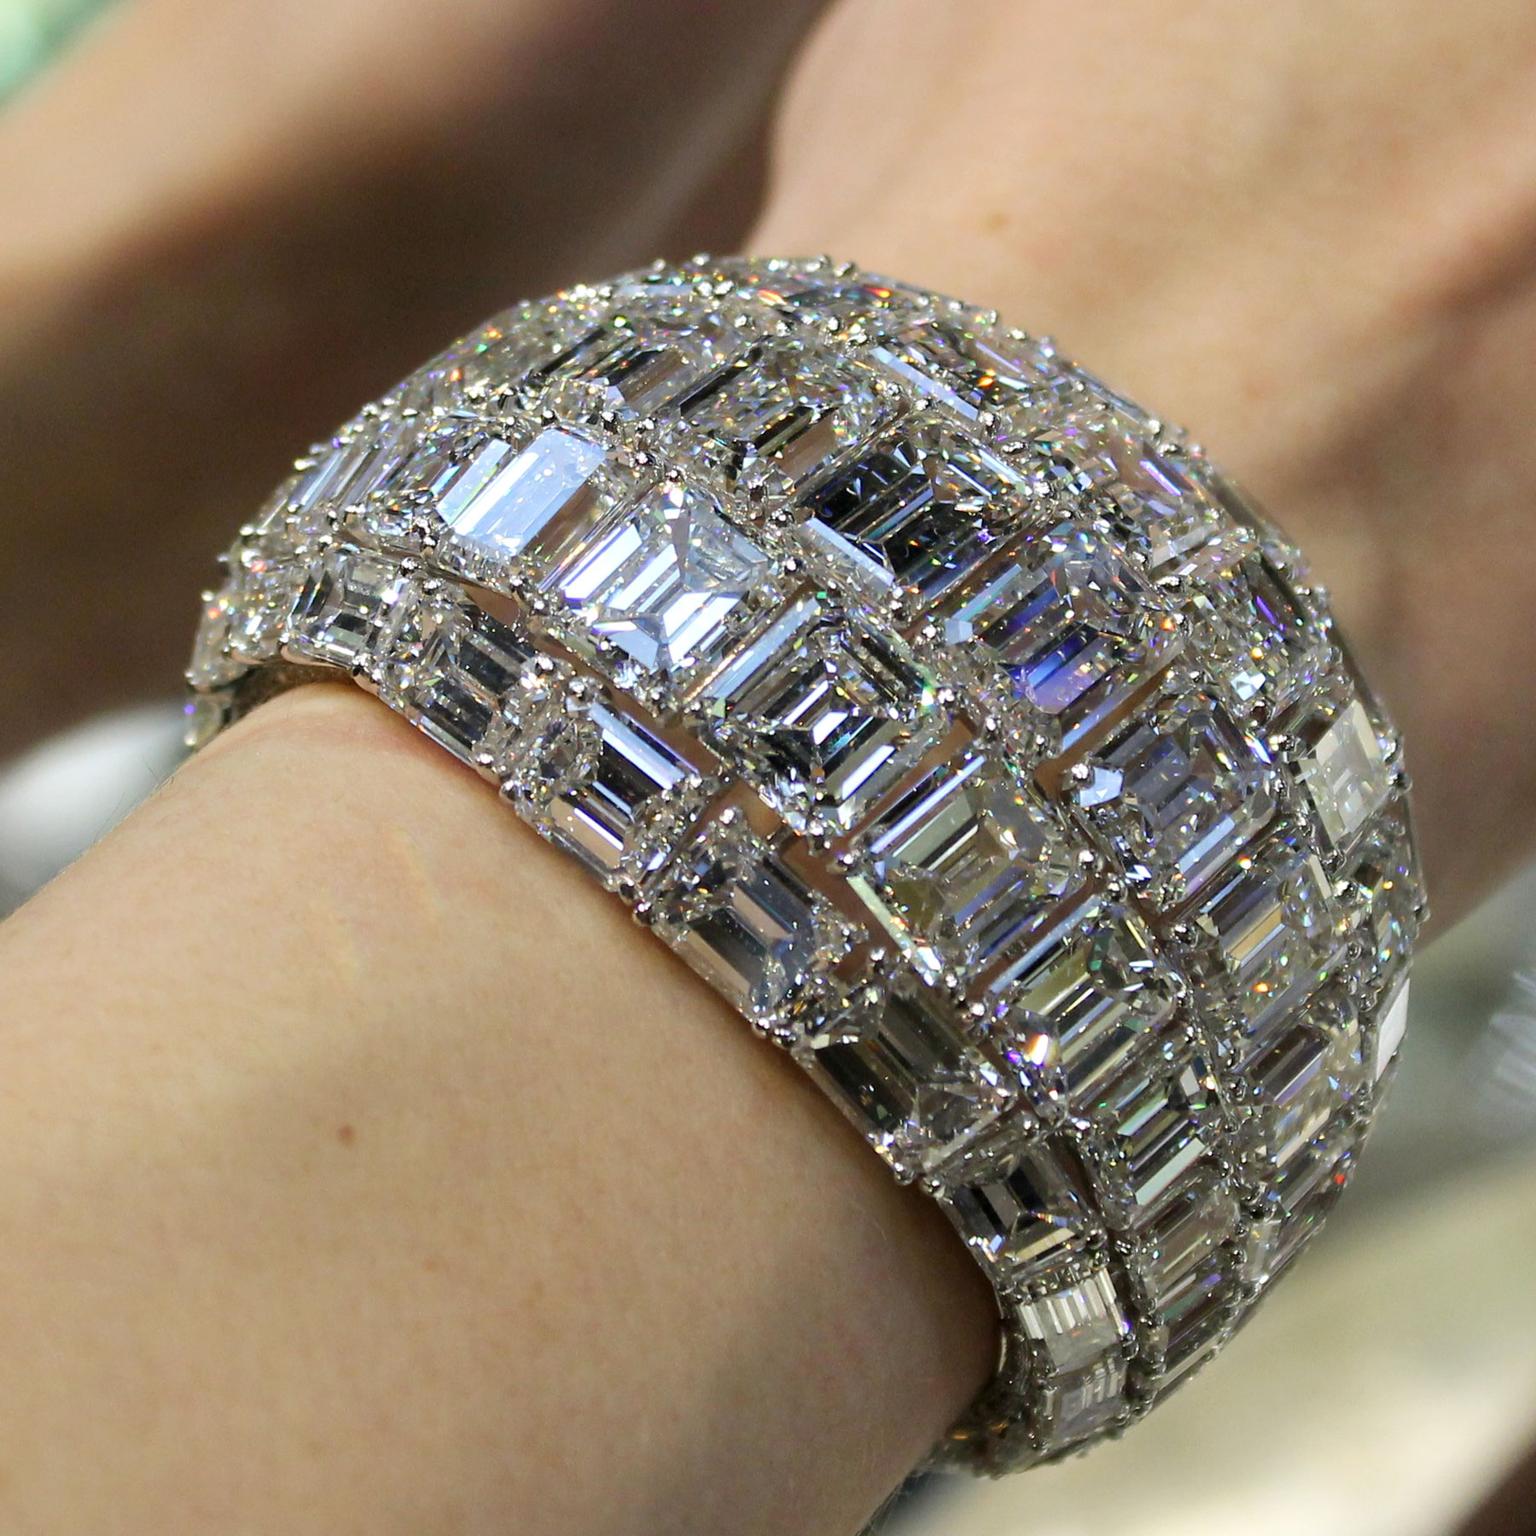 Moussaieff emerald-cut diamond bracelet on model